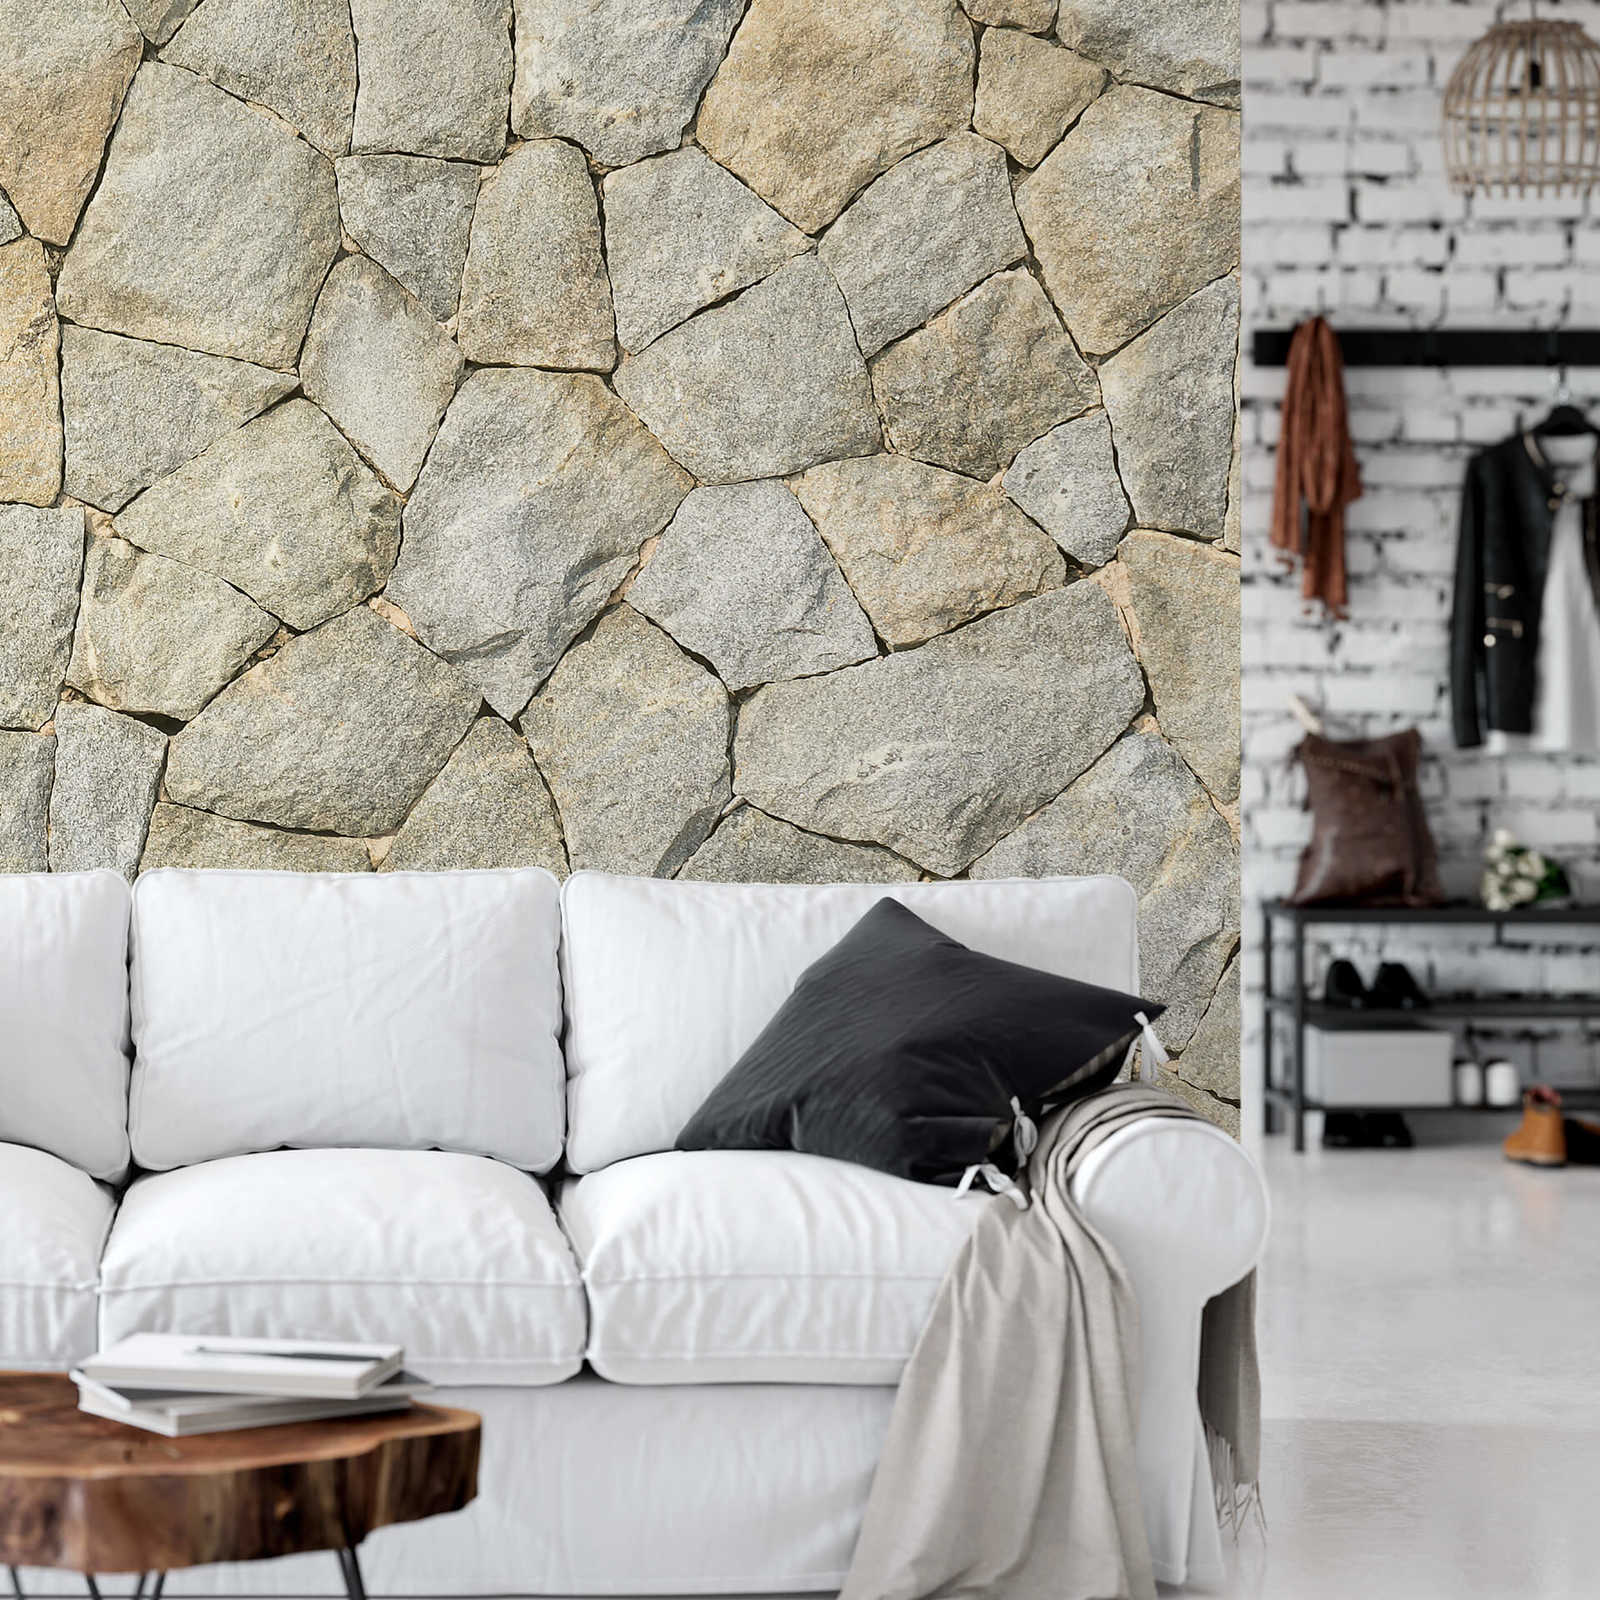             Fototapete 3D Natursteinoptik Wand – Grau
        